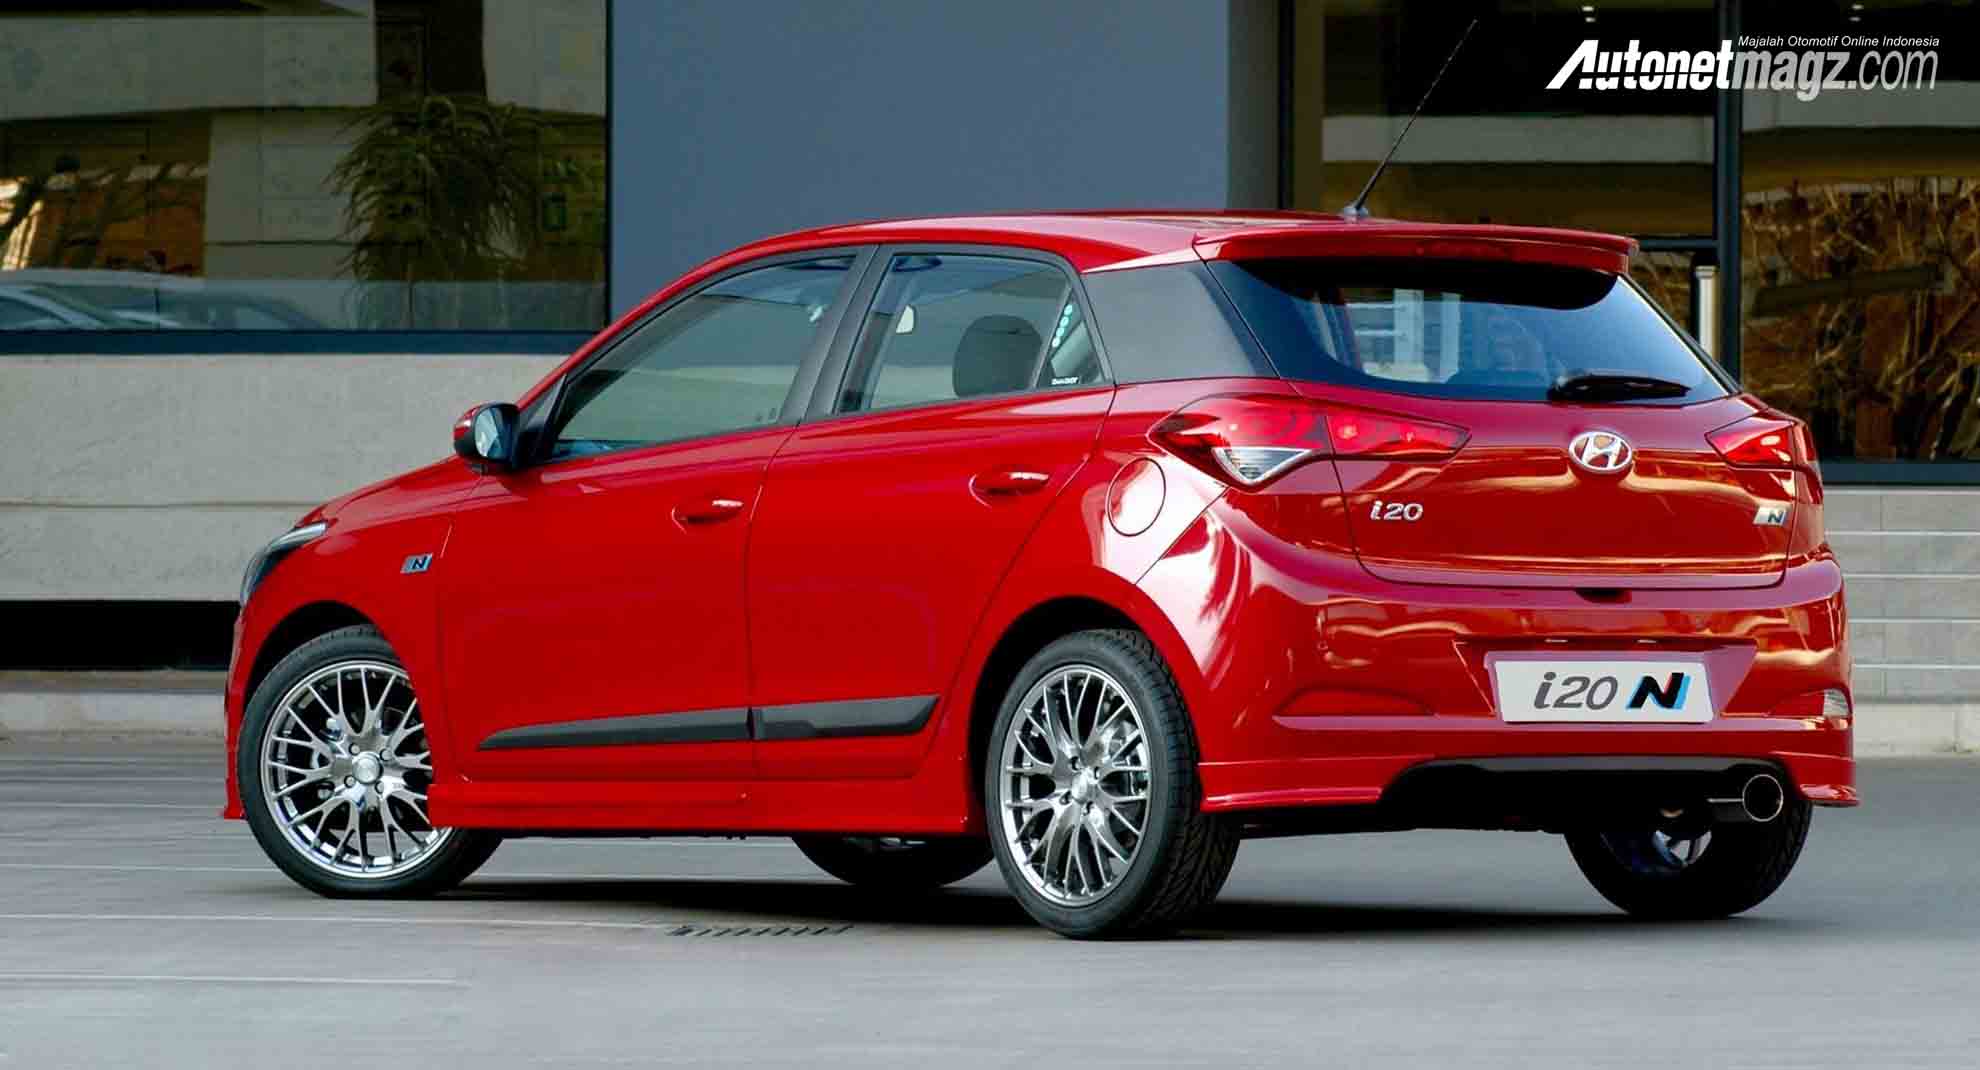 Berita, Hyundai i20 N belakang: Hyundai Sedang Siapkan Versi Kencang dari Hyundai i20